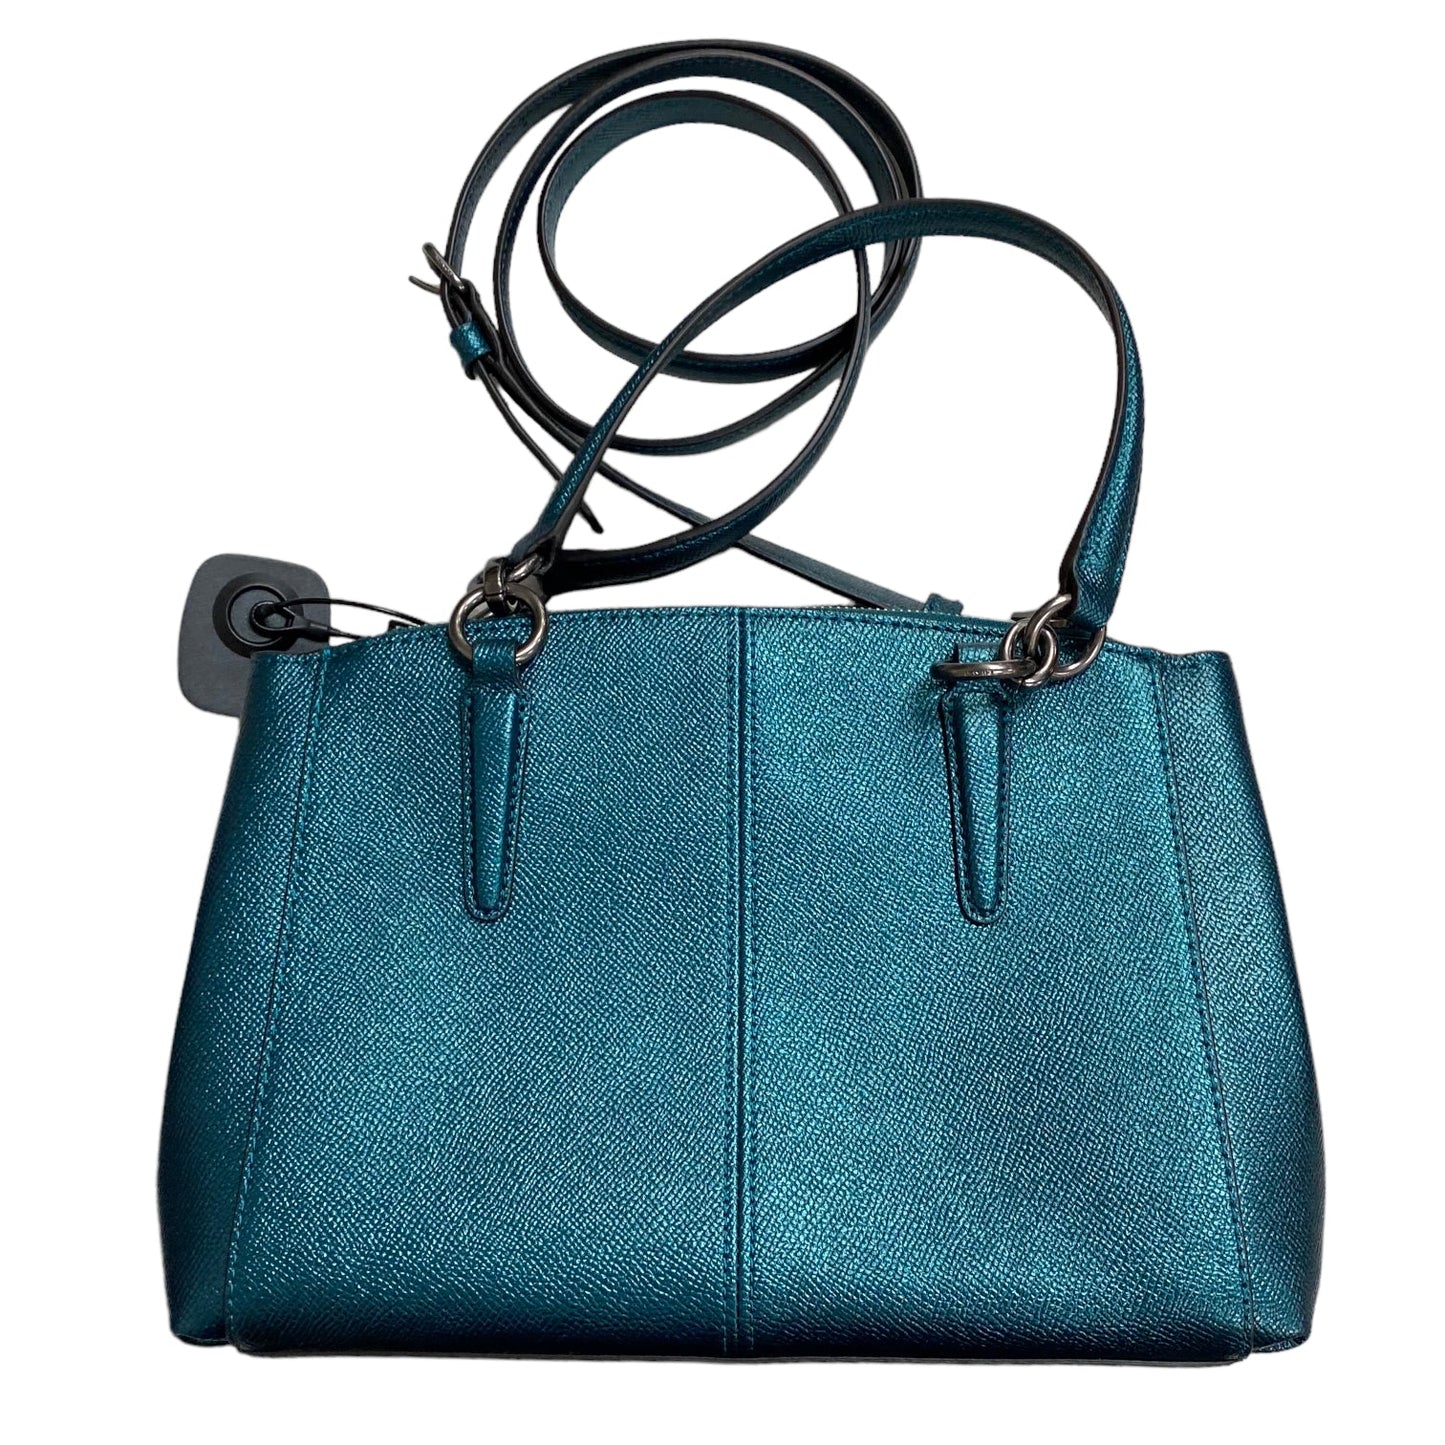 Handbag Designer Coach, Size Small